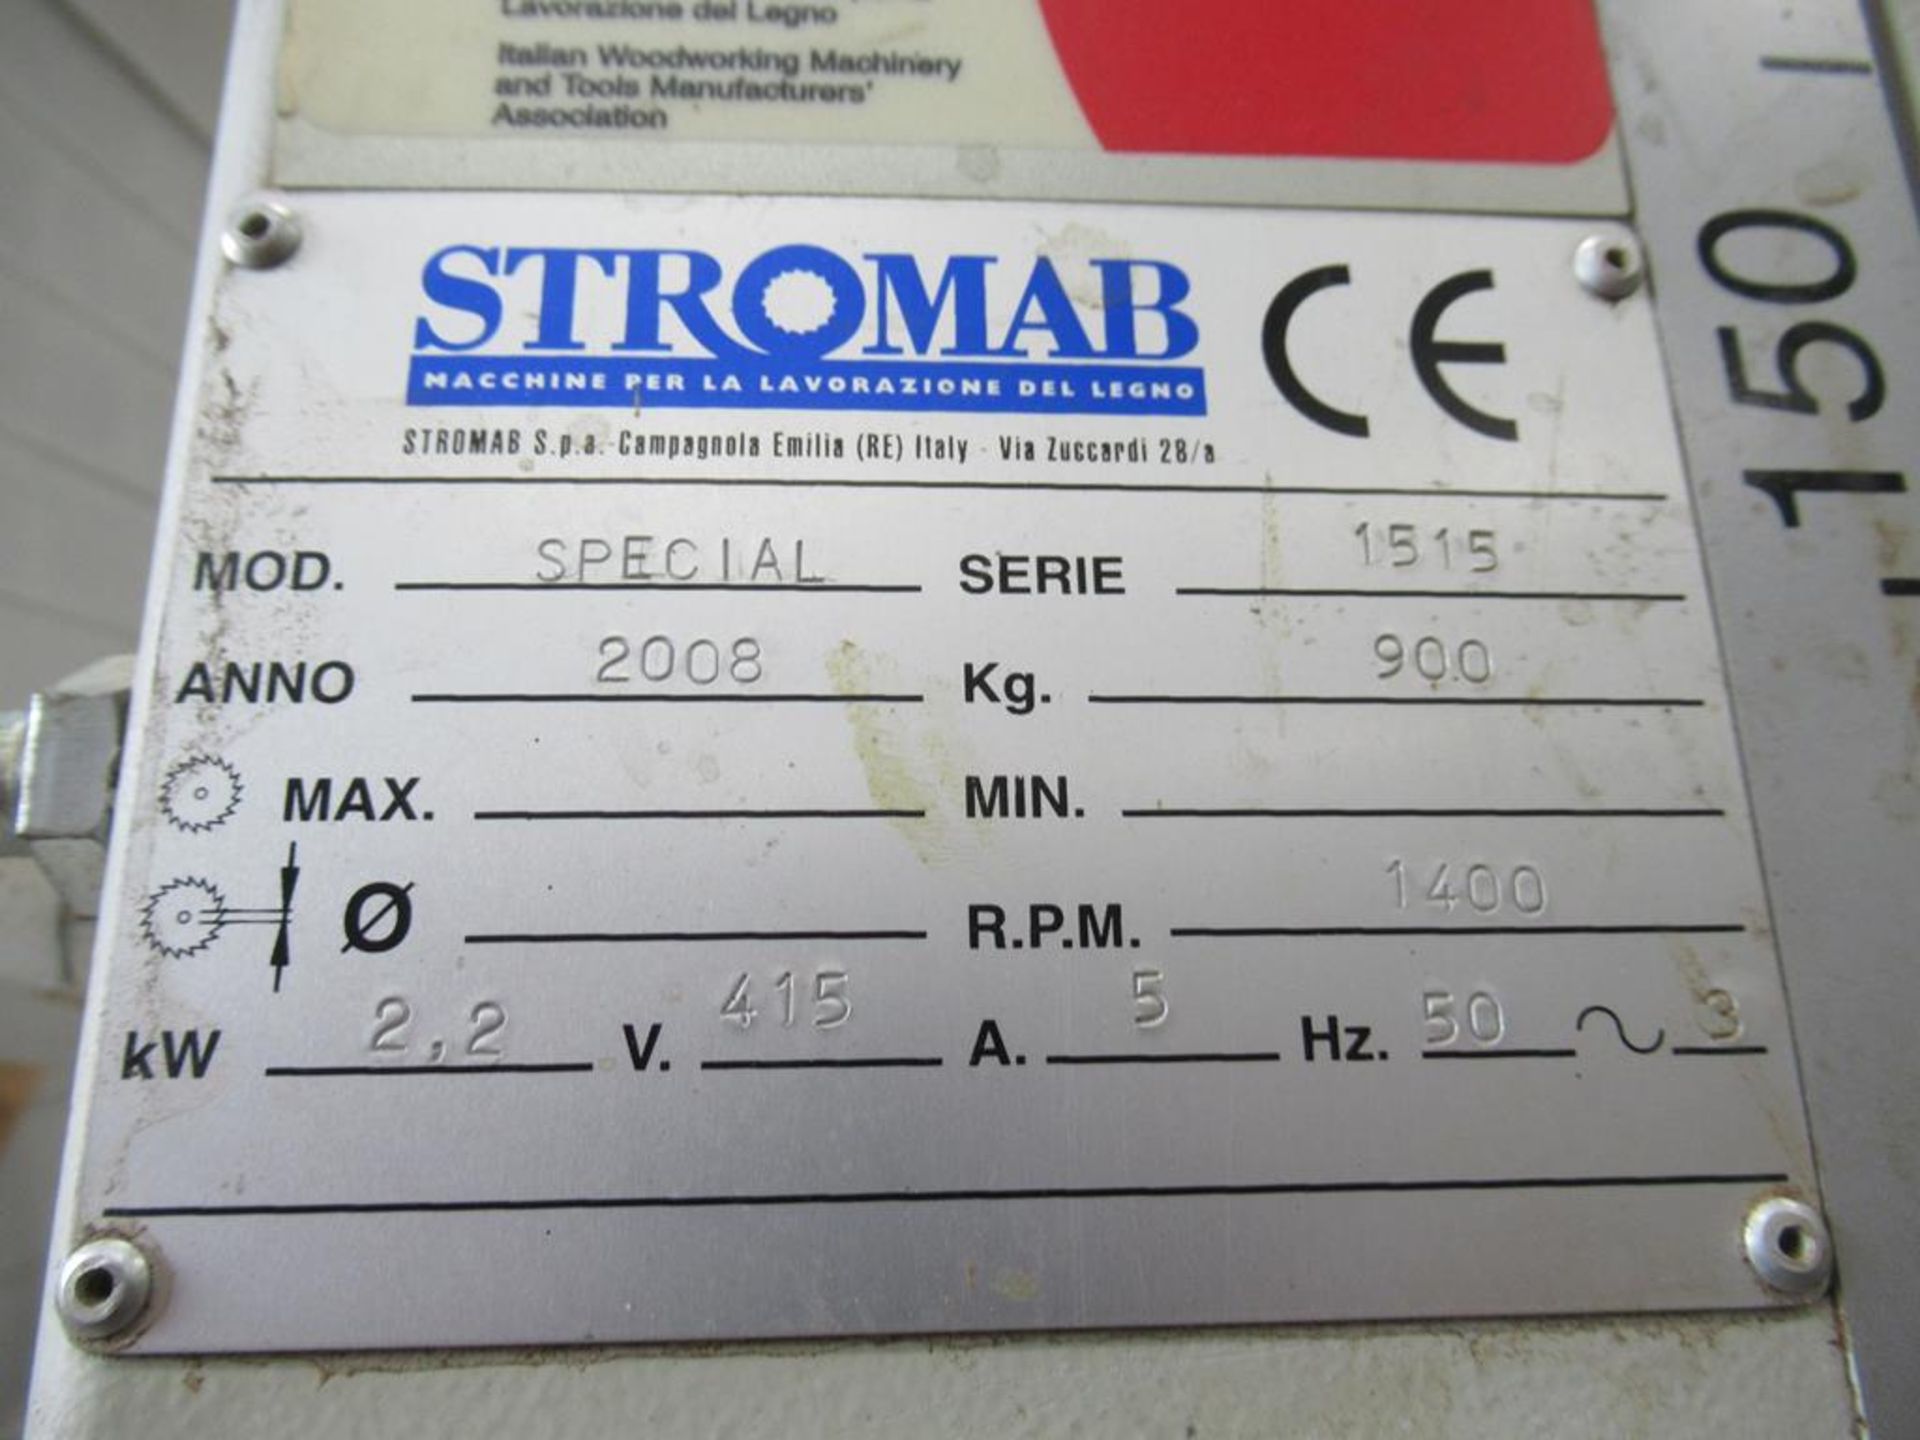 A Stromab STH Special hydraulic Frame Cramp 3 x 2m Capacity YOM 2008, 900kg, 415V, 3 phase, 50Hz - Image 5 of 5